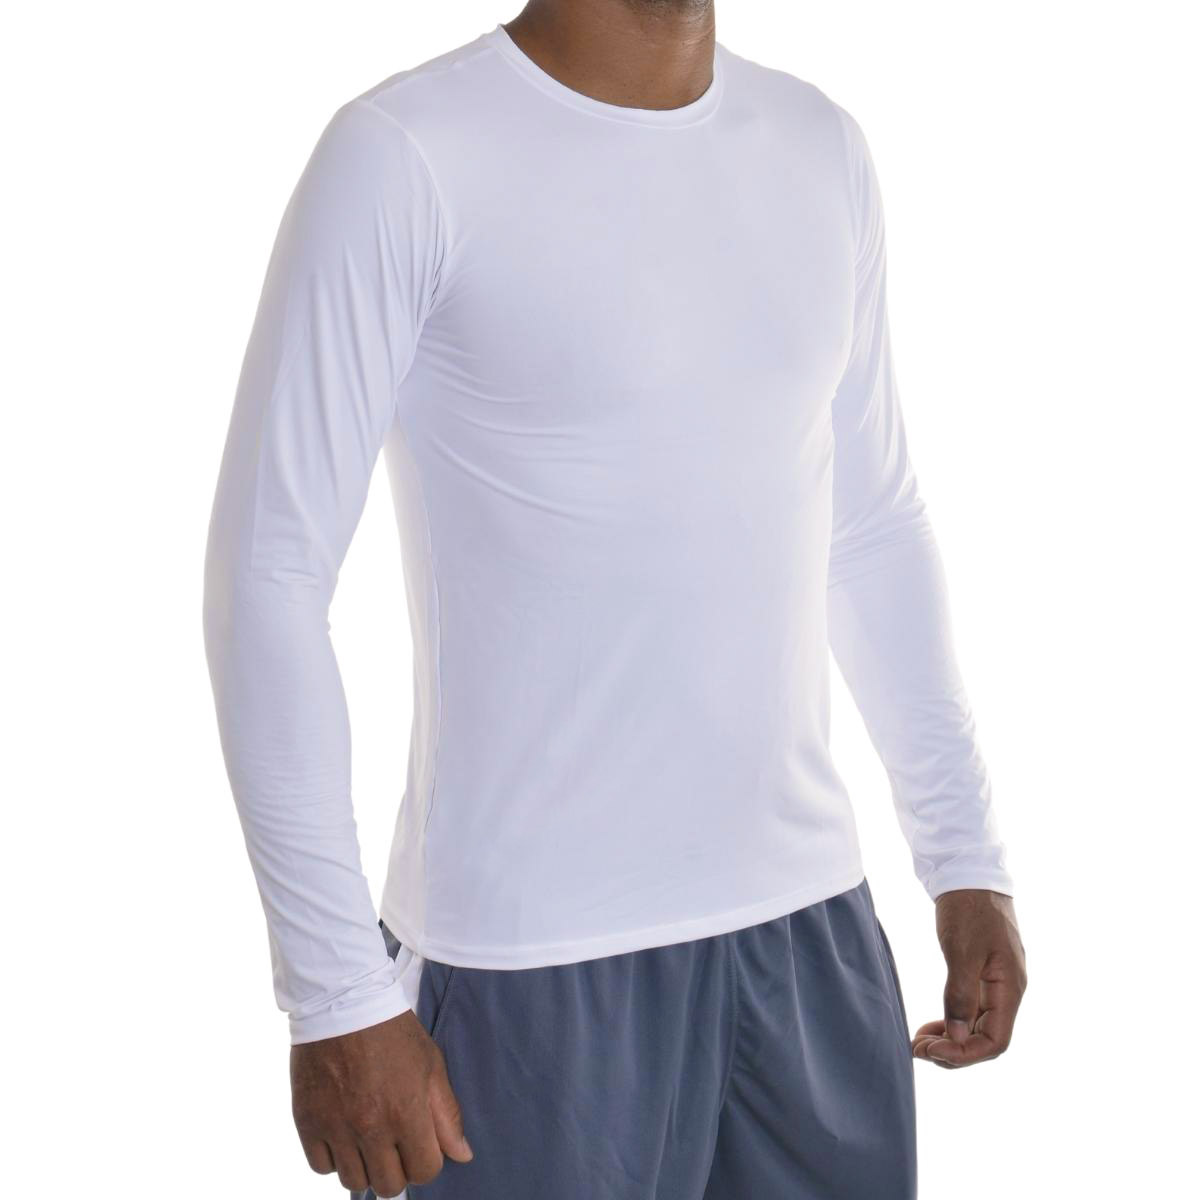 Camiseta masculina manga longa com proteção UV Selene